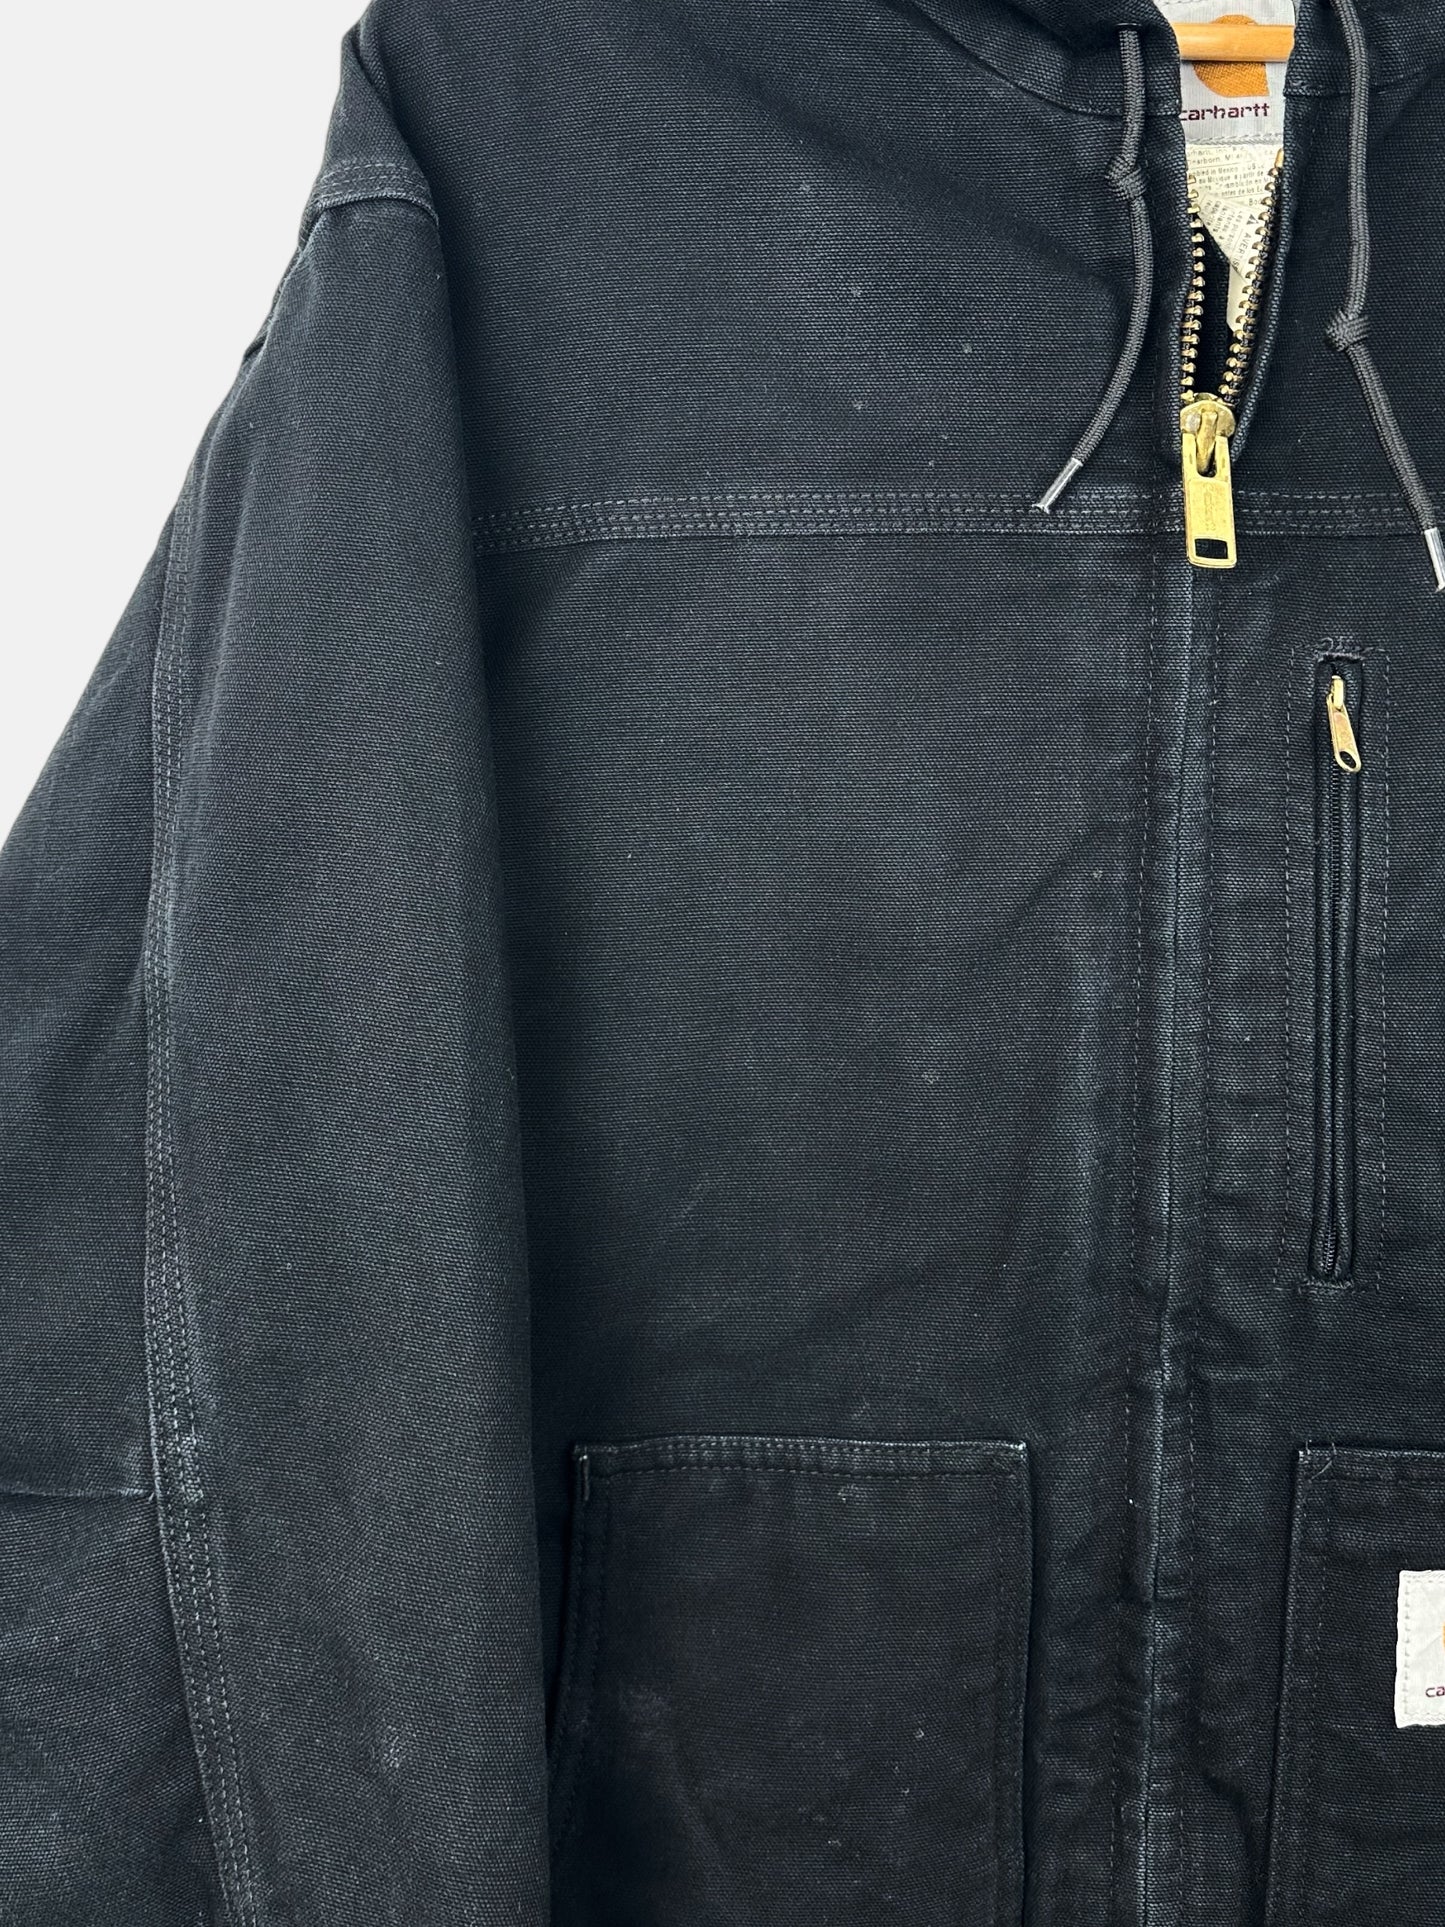 90's Carhartt Heavy Duty Vintage Sherpa Lined Jacket with Hood Size XL